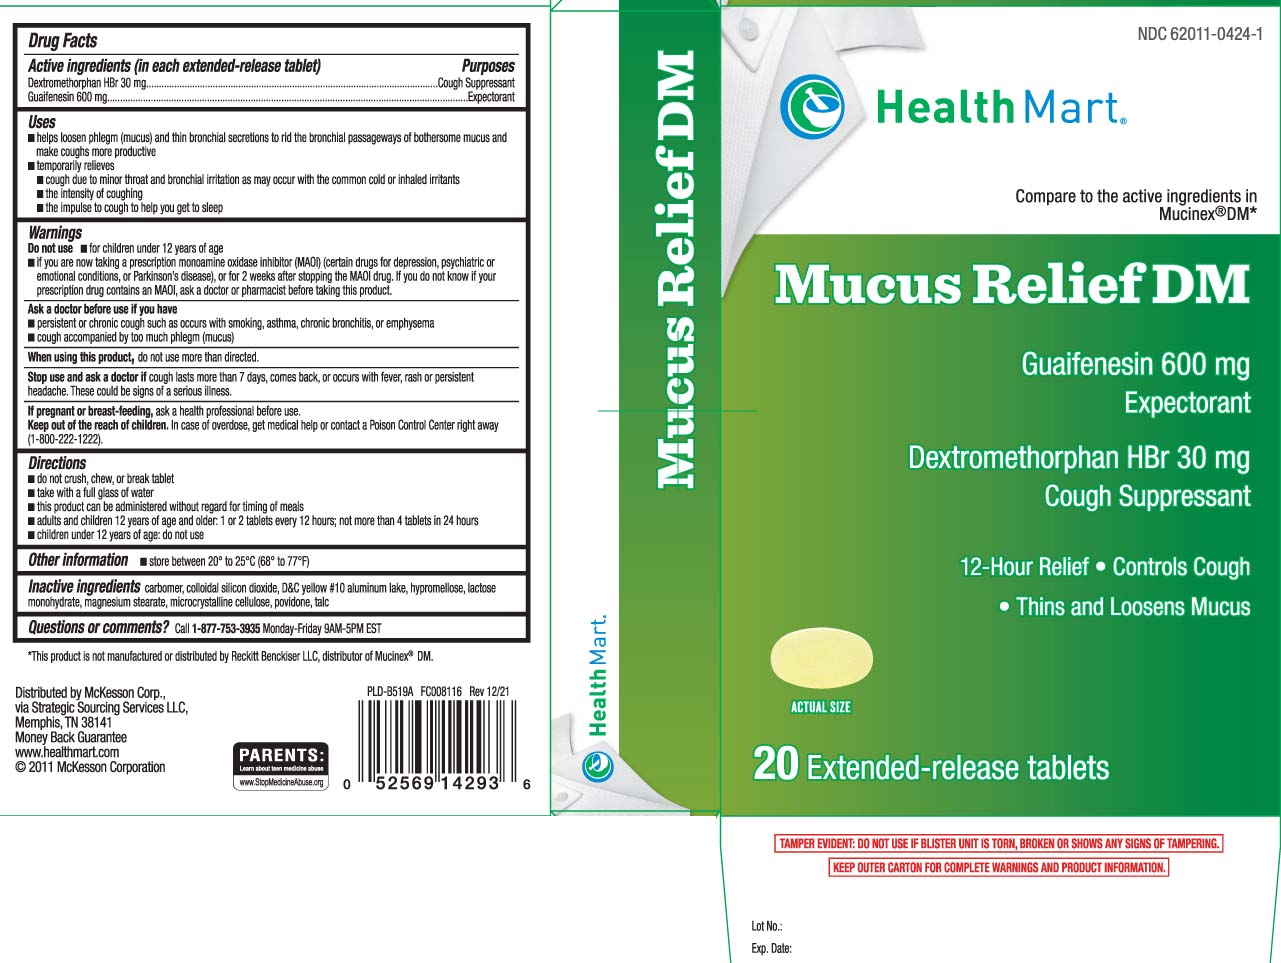 Dextromethorphan HBr 30 mg, Guaifenesin 600 mg